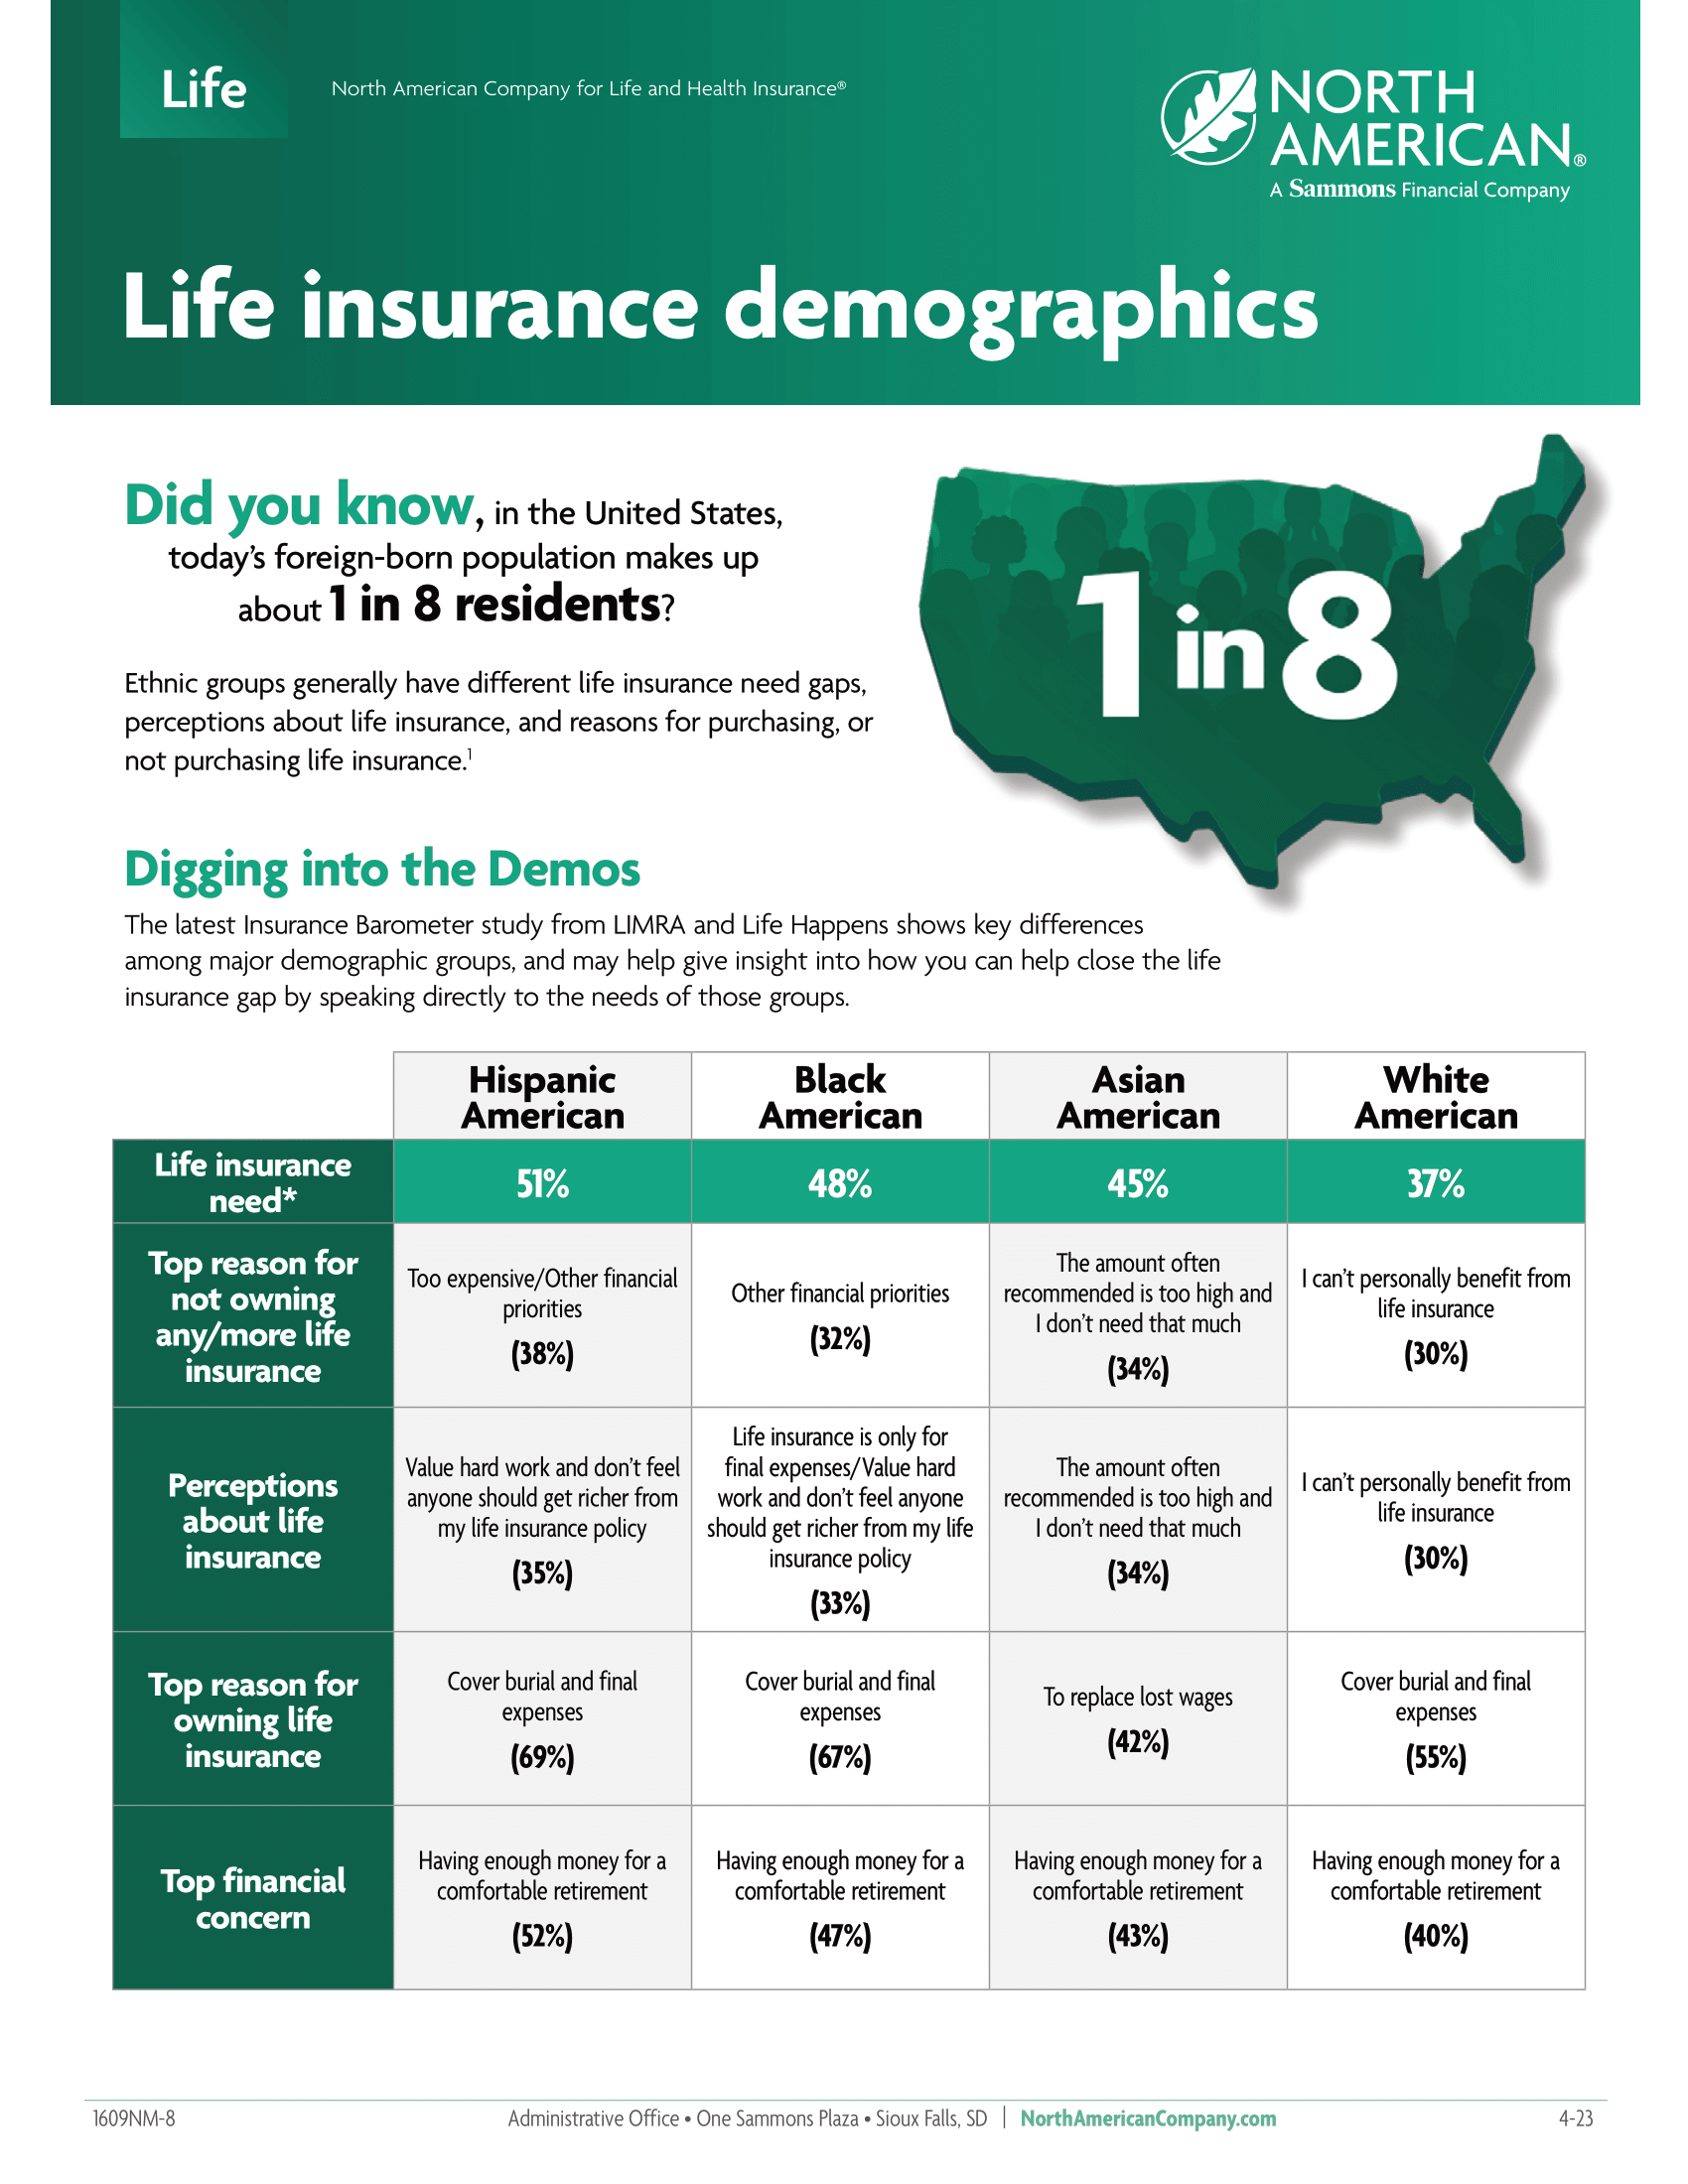 Life Insurance Demorgraphic